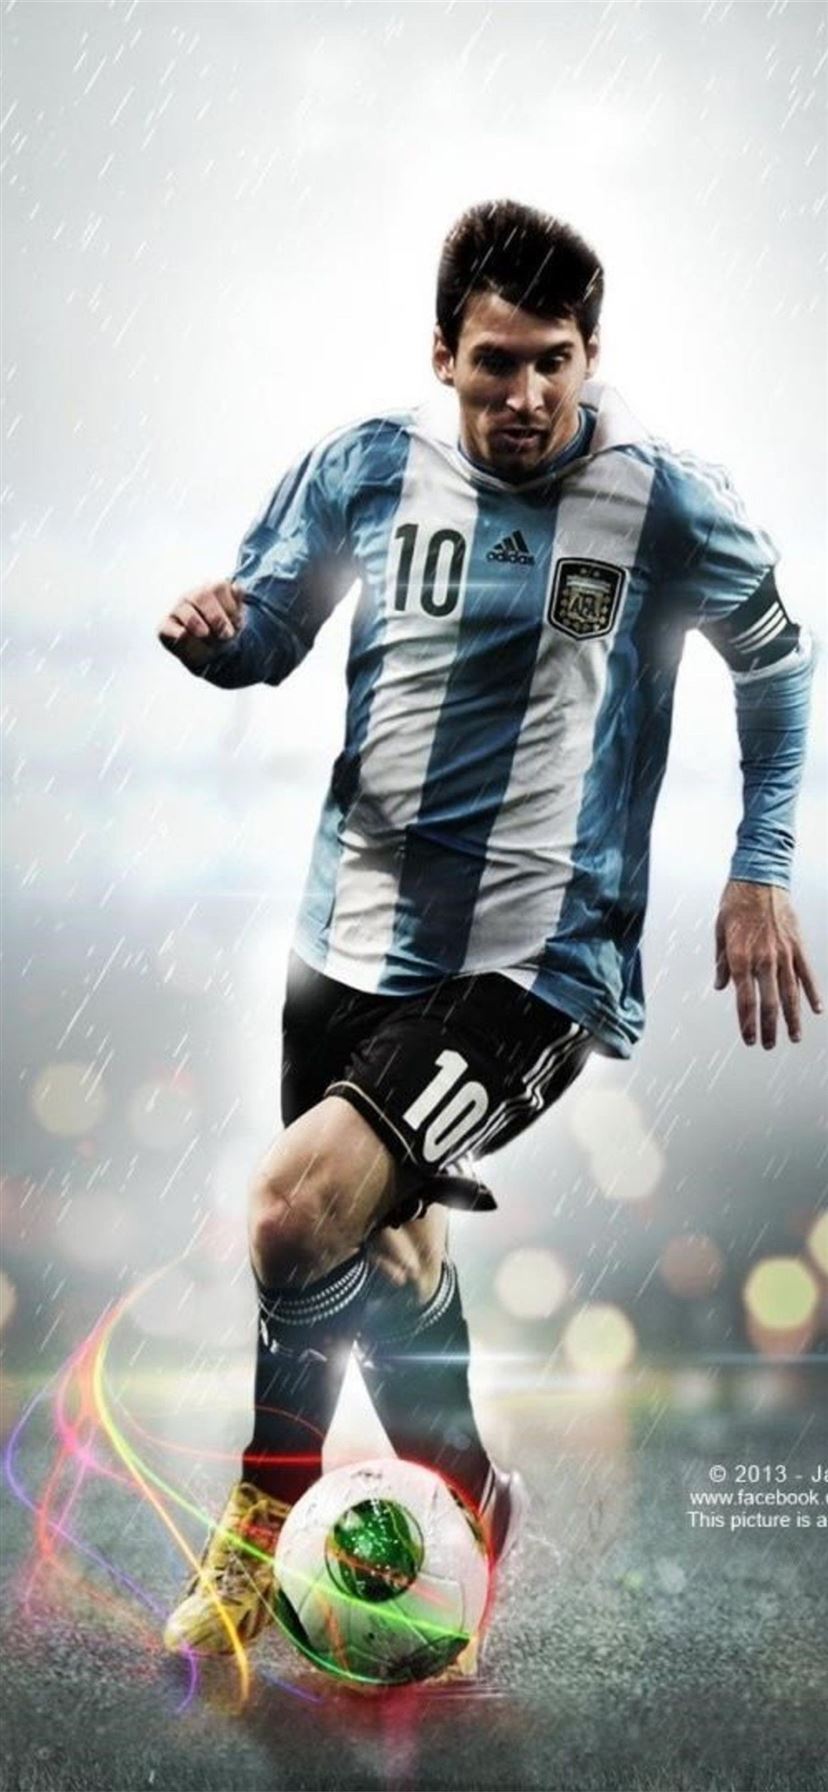 Messi In Football Field IPhone Wallpaper HD  IPhone Wallpapers  iPhone  Wallpapers